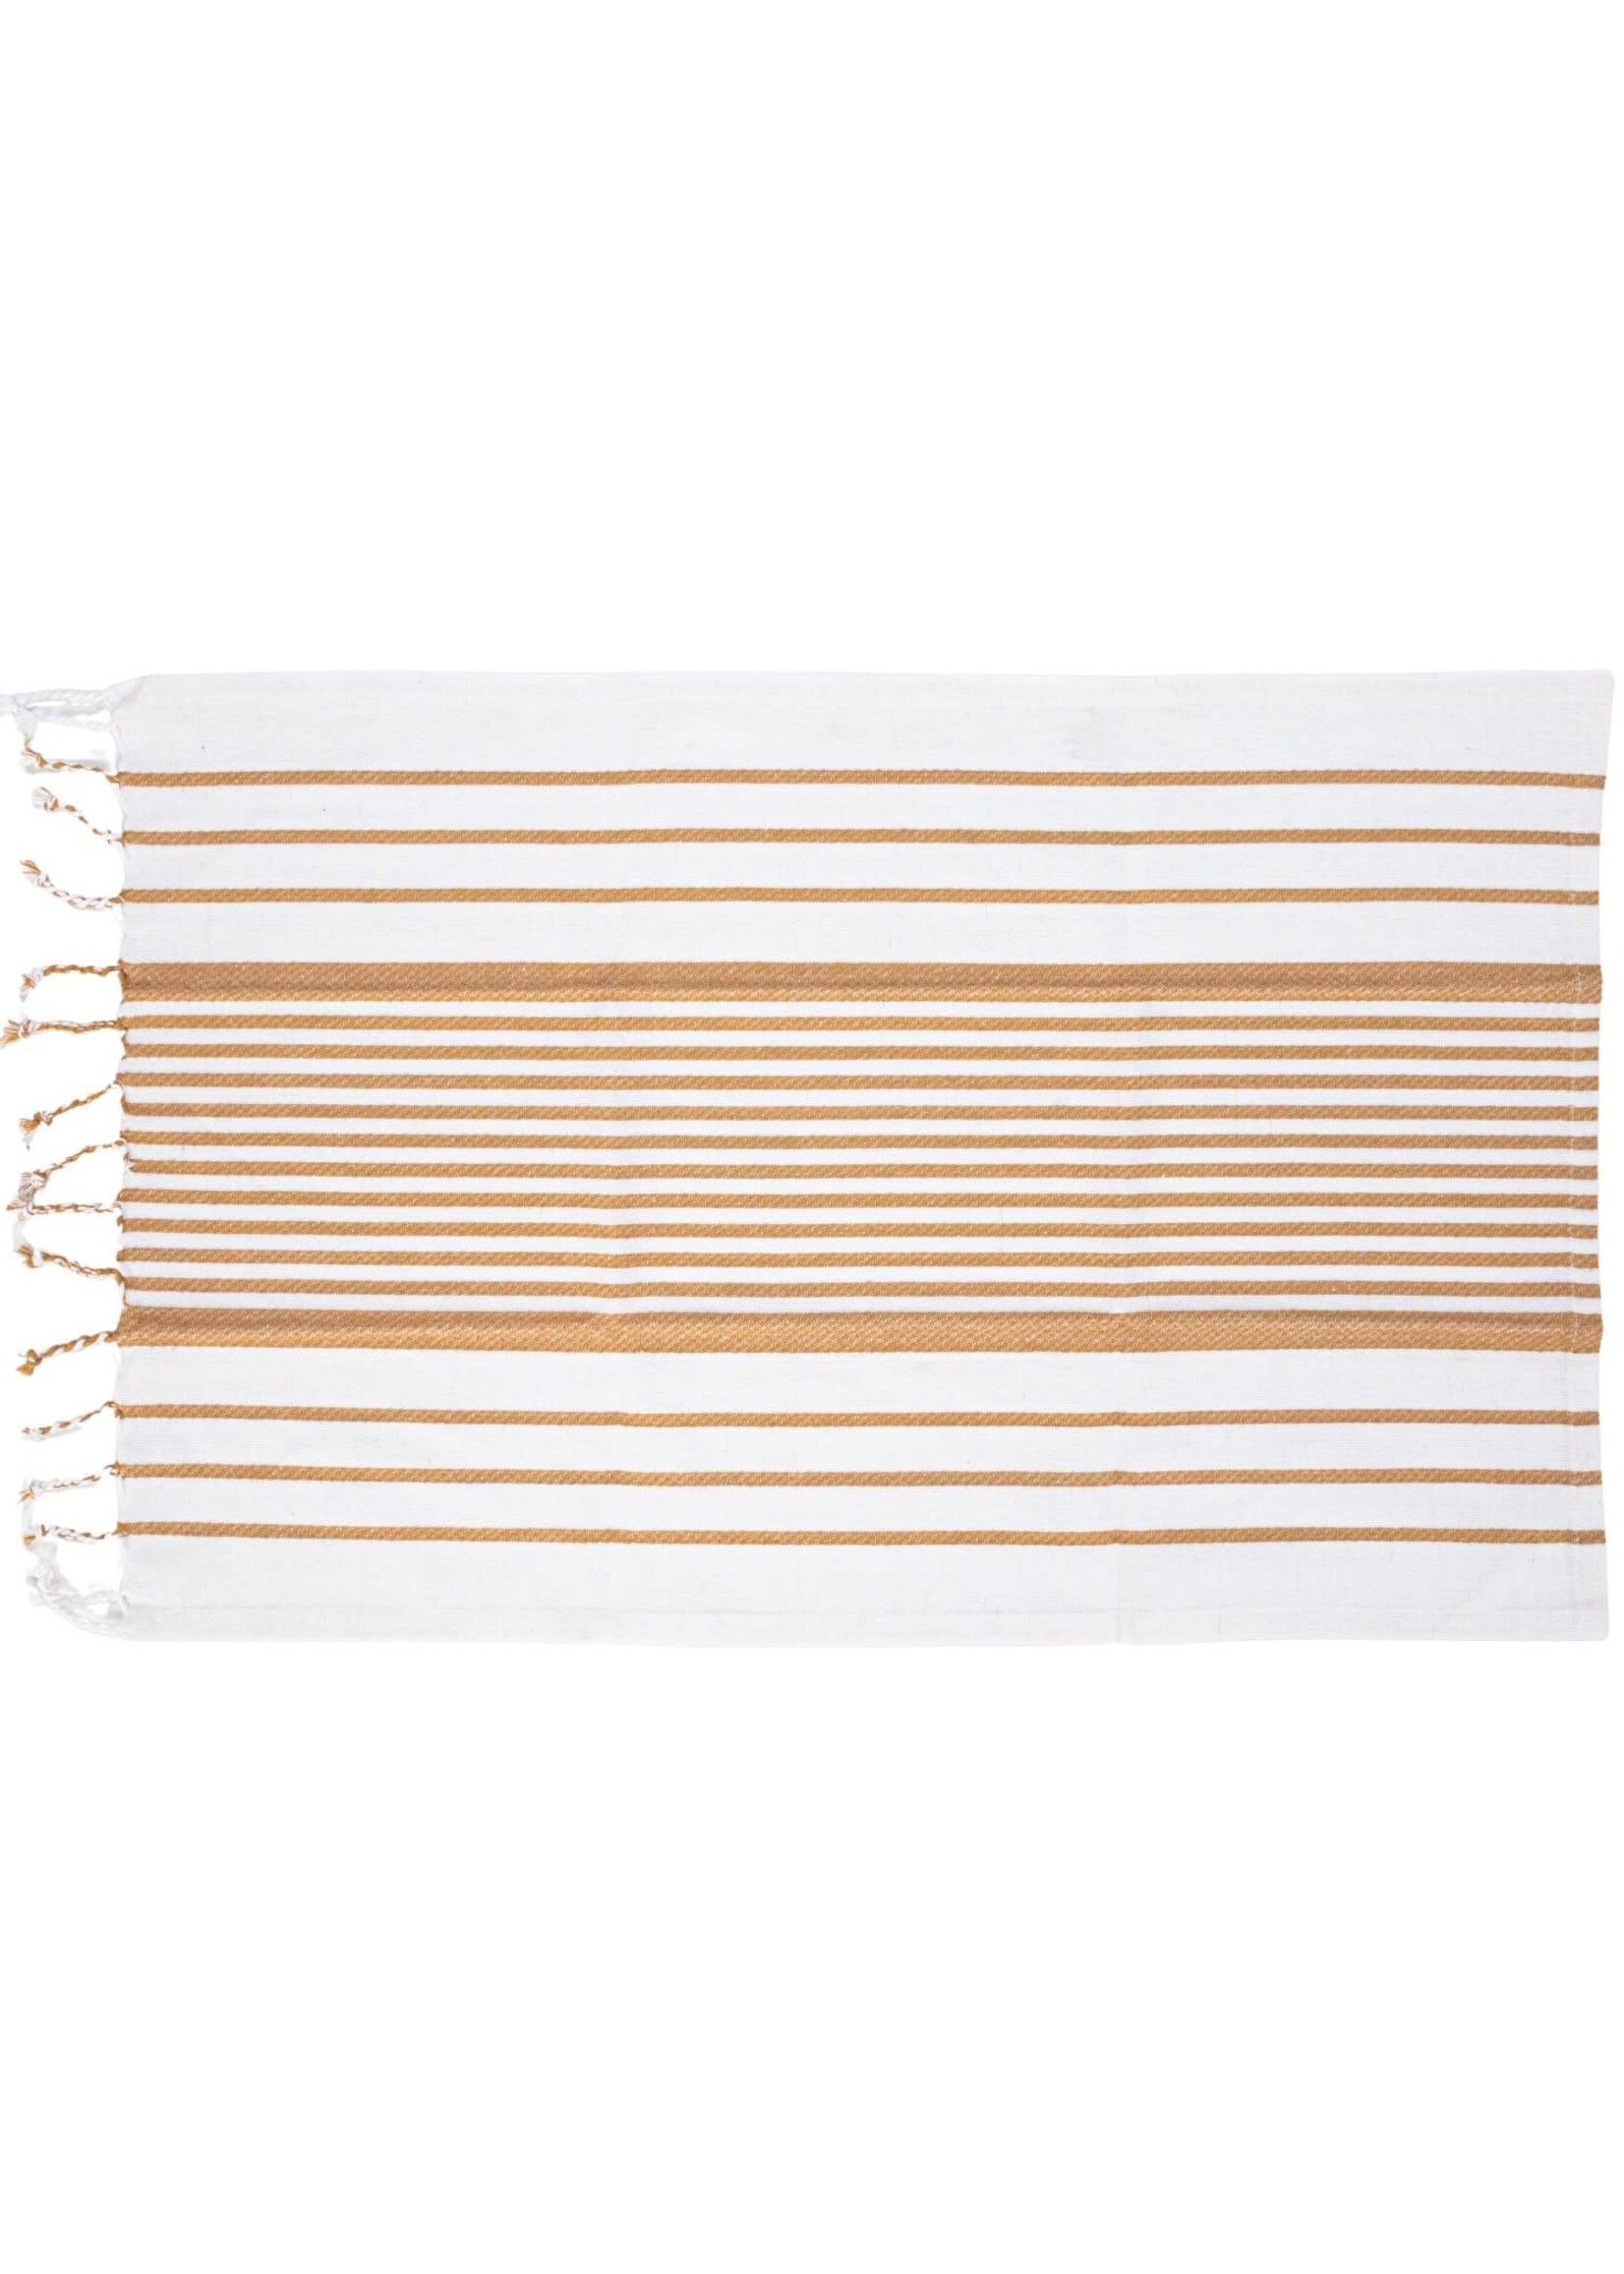 Woven Cotton Yarn Dyed Kitchen Towel w/ Stripes & Tassels, Set of 3